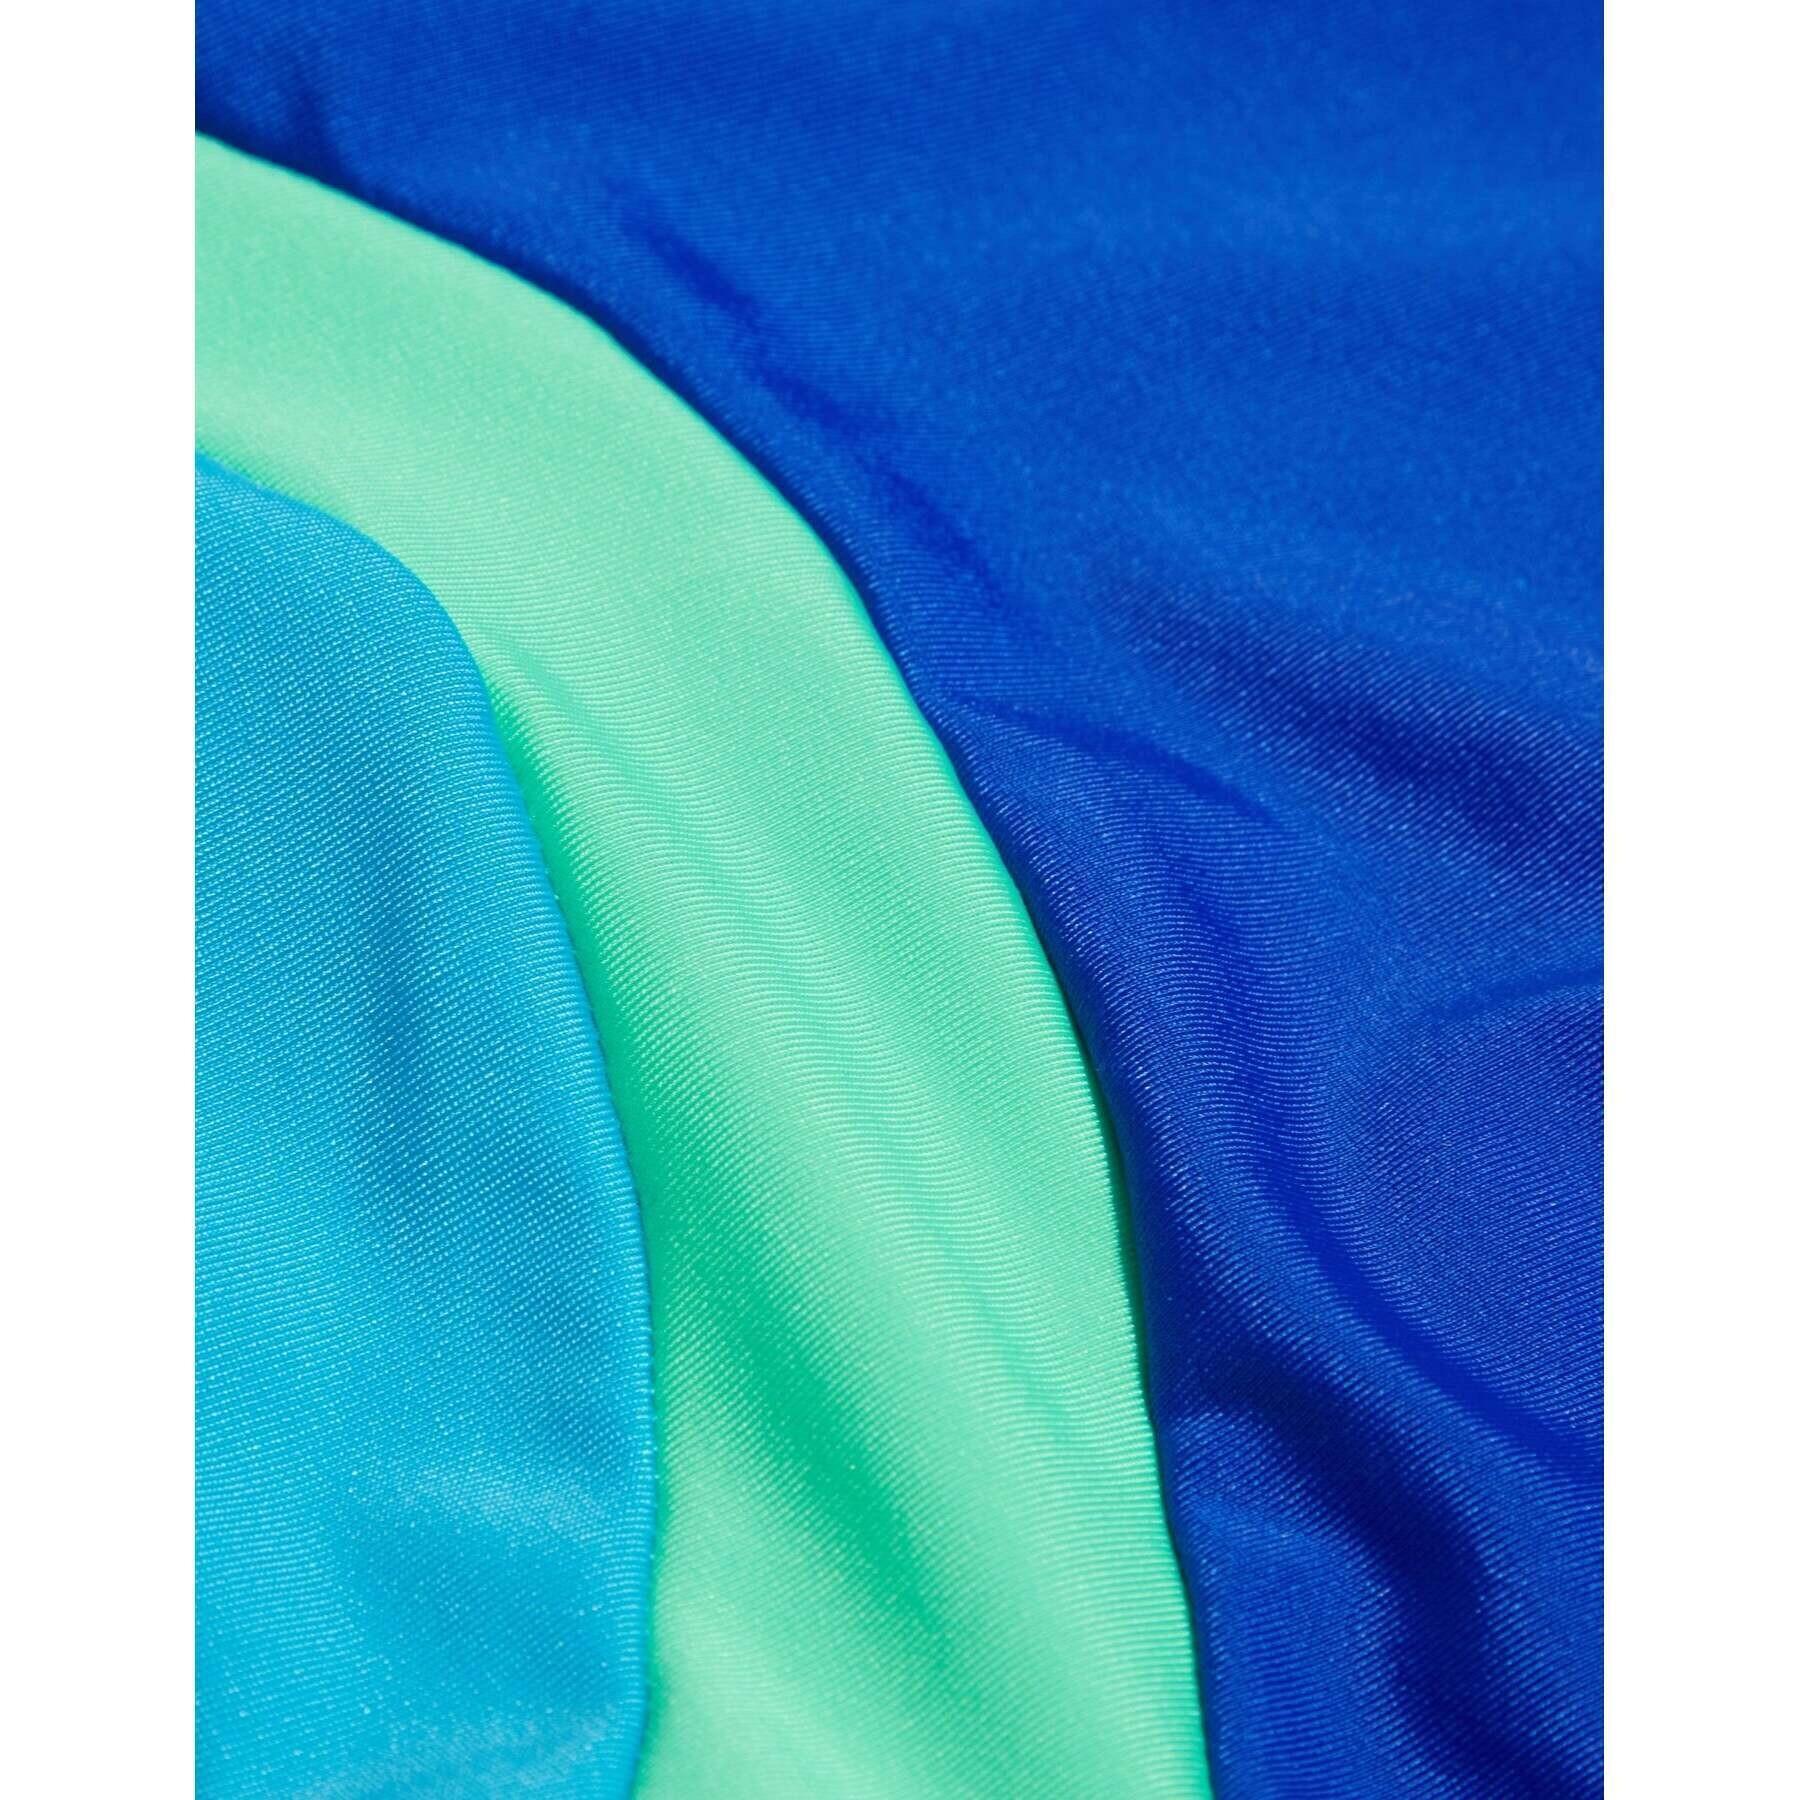 1-piece swimsuit for girls Speedo Eco Colourblock Spiritback